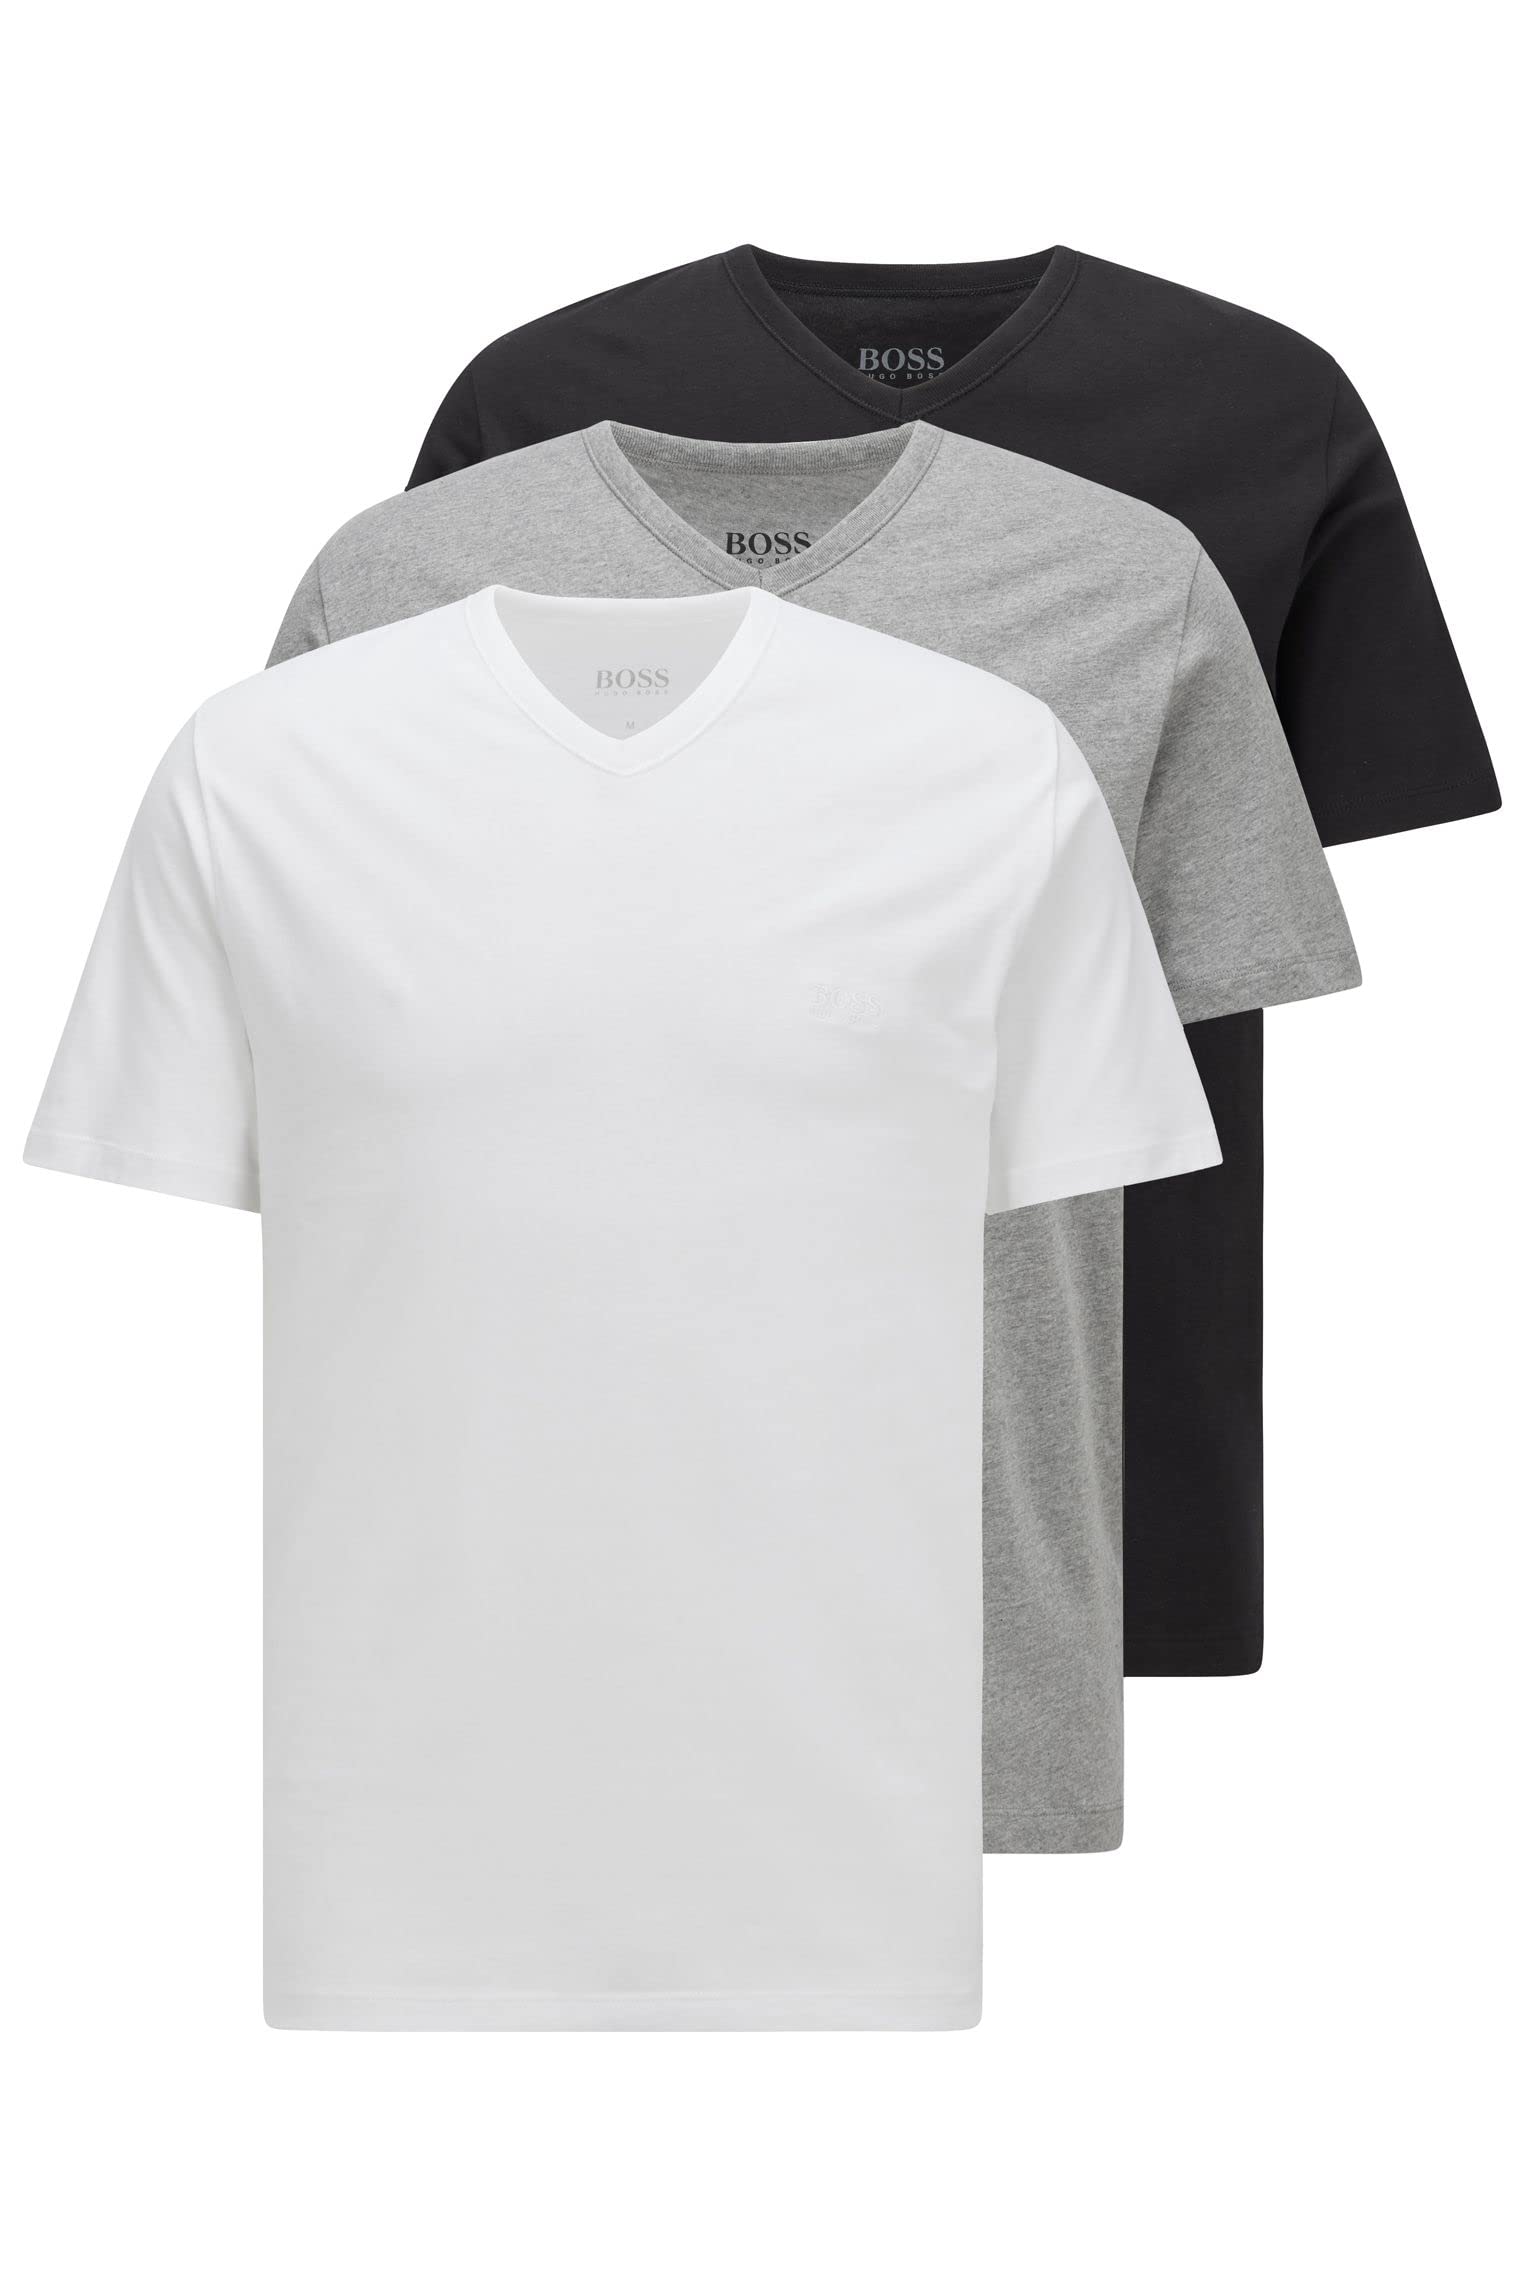 BOSS Herren Classic T-Shirts Kurzarm Shirts Pure Cotton V-Neck 3er Pack, Farbe:Mehrfarbig, Artikel:-999 Black/White/Grey, Größe:S